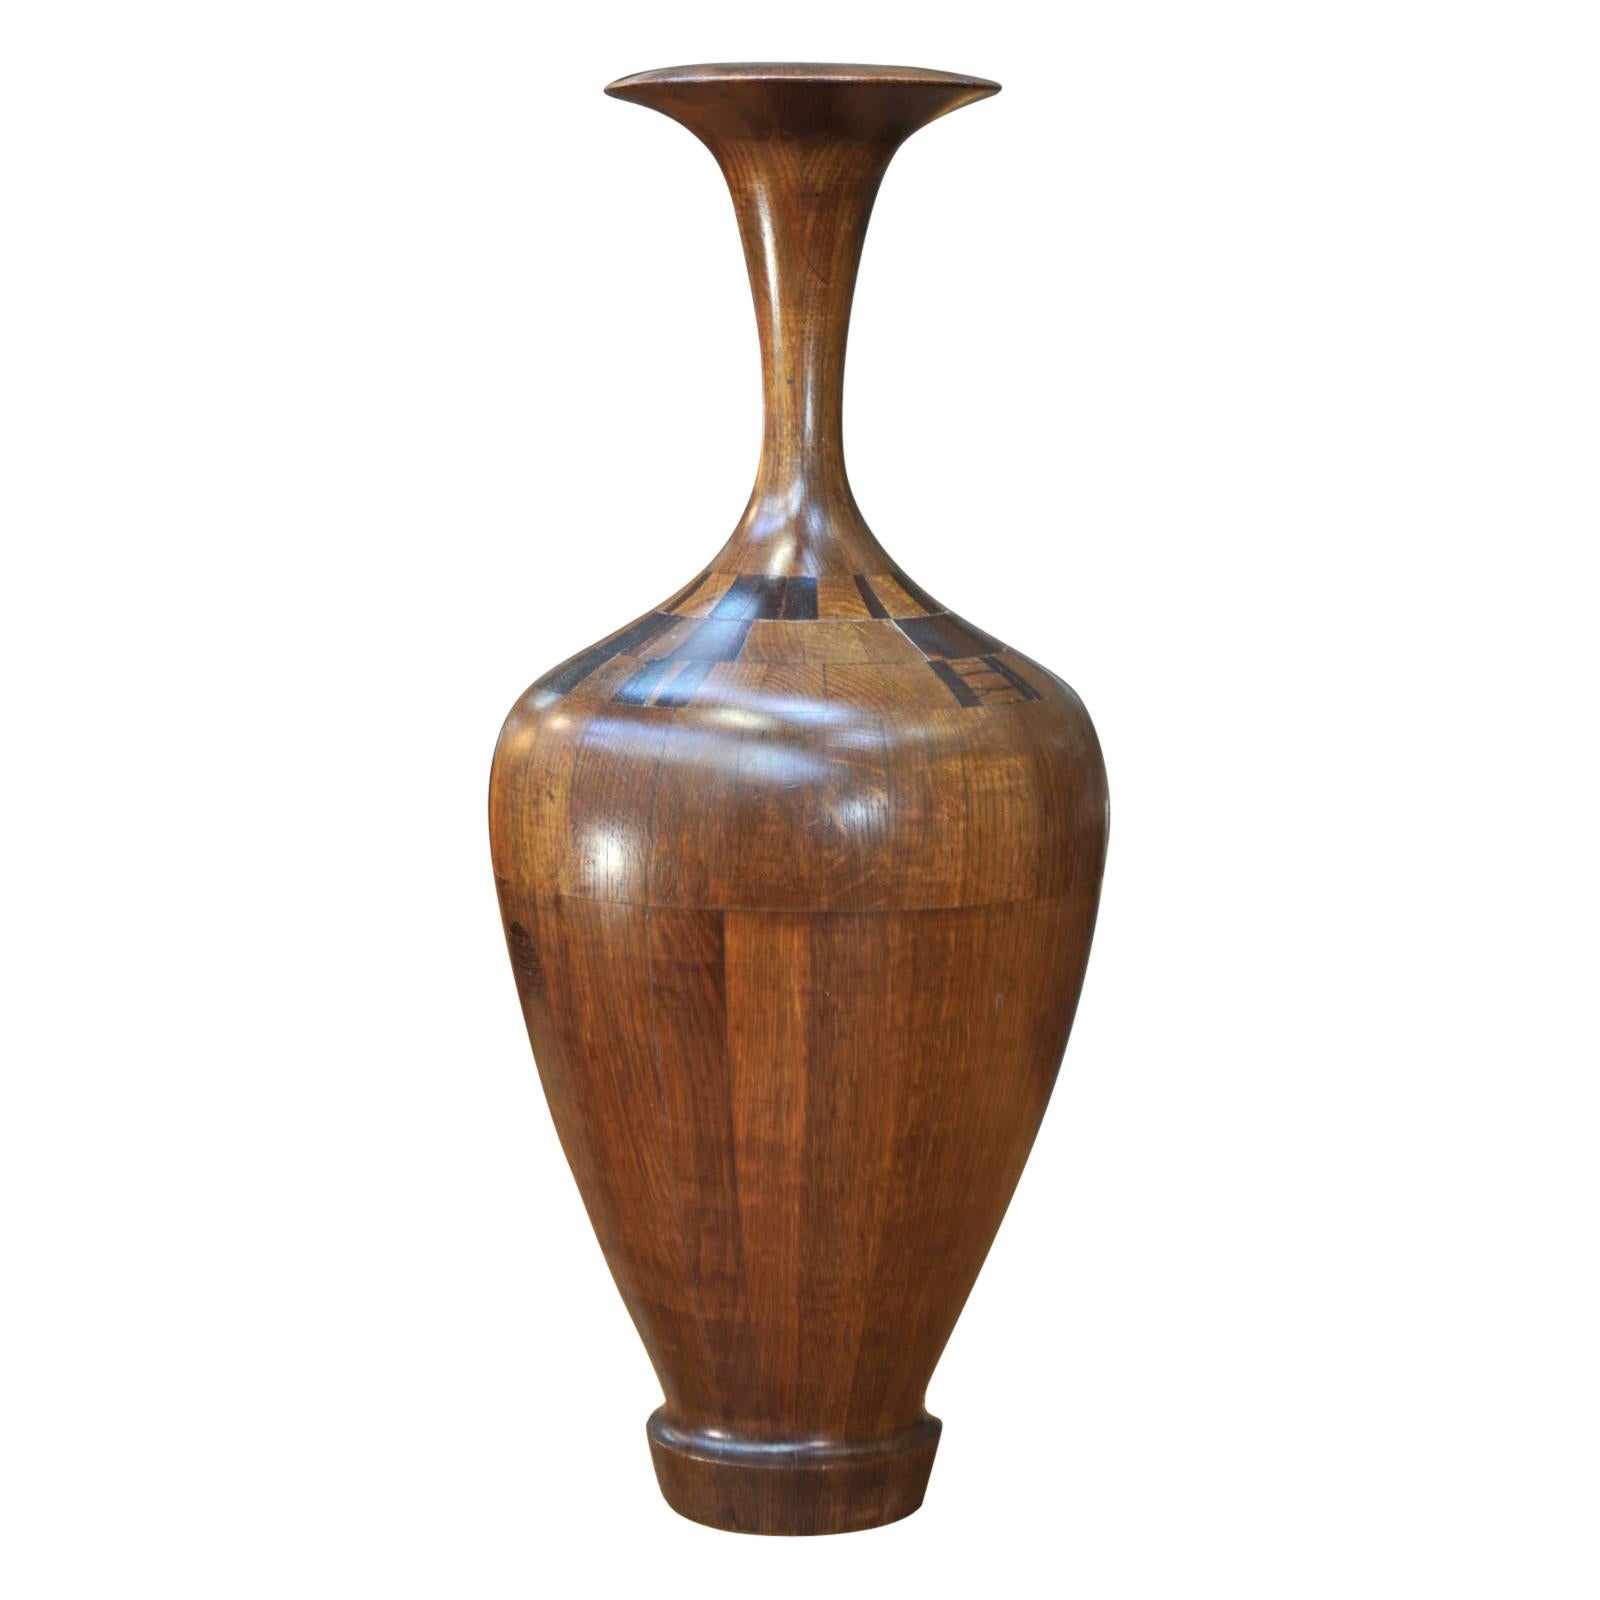  Art Déco Timber Vase by Belgium Manufacturer De Coene Frere For Sale